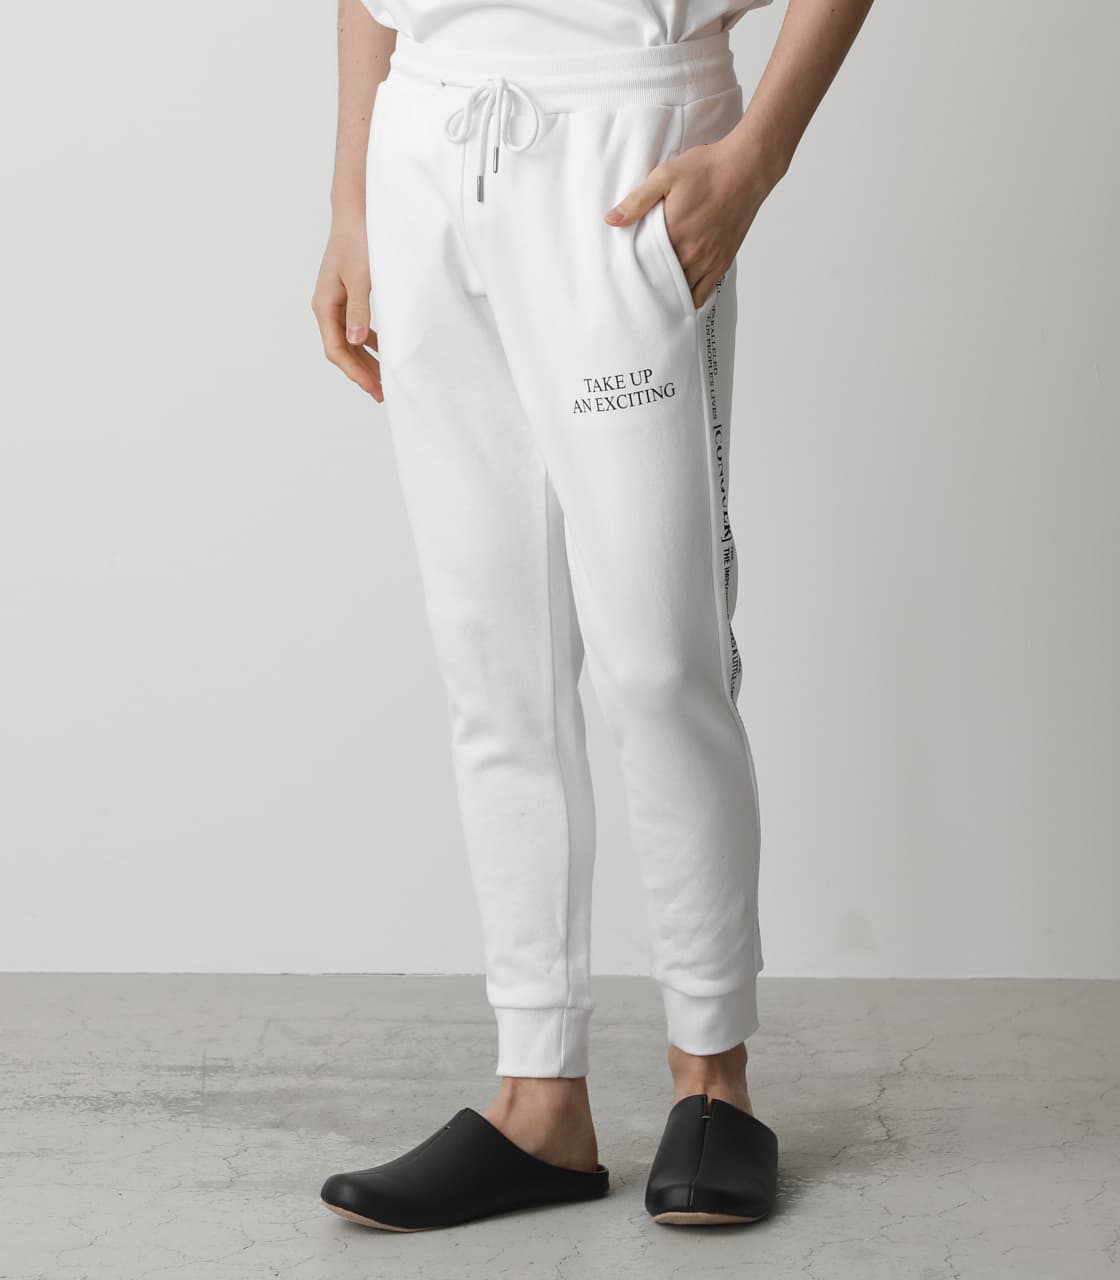 JINSHI Mens Modal Pajama Pants 2 Pack Lightweight Long Bottoms